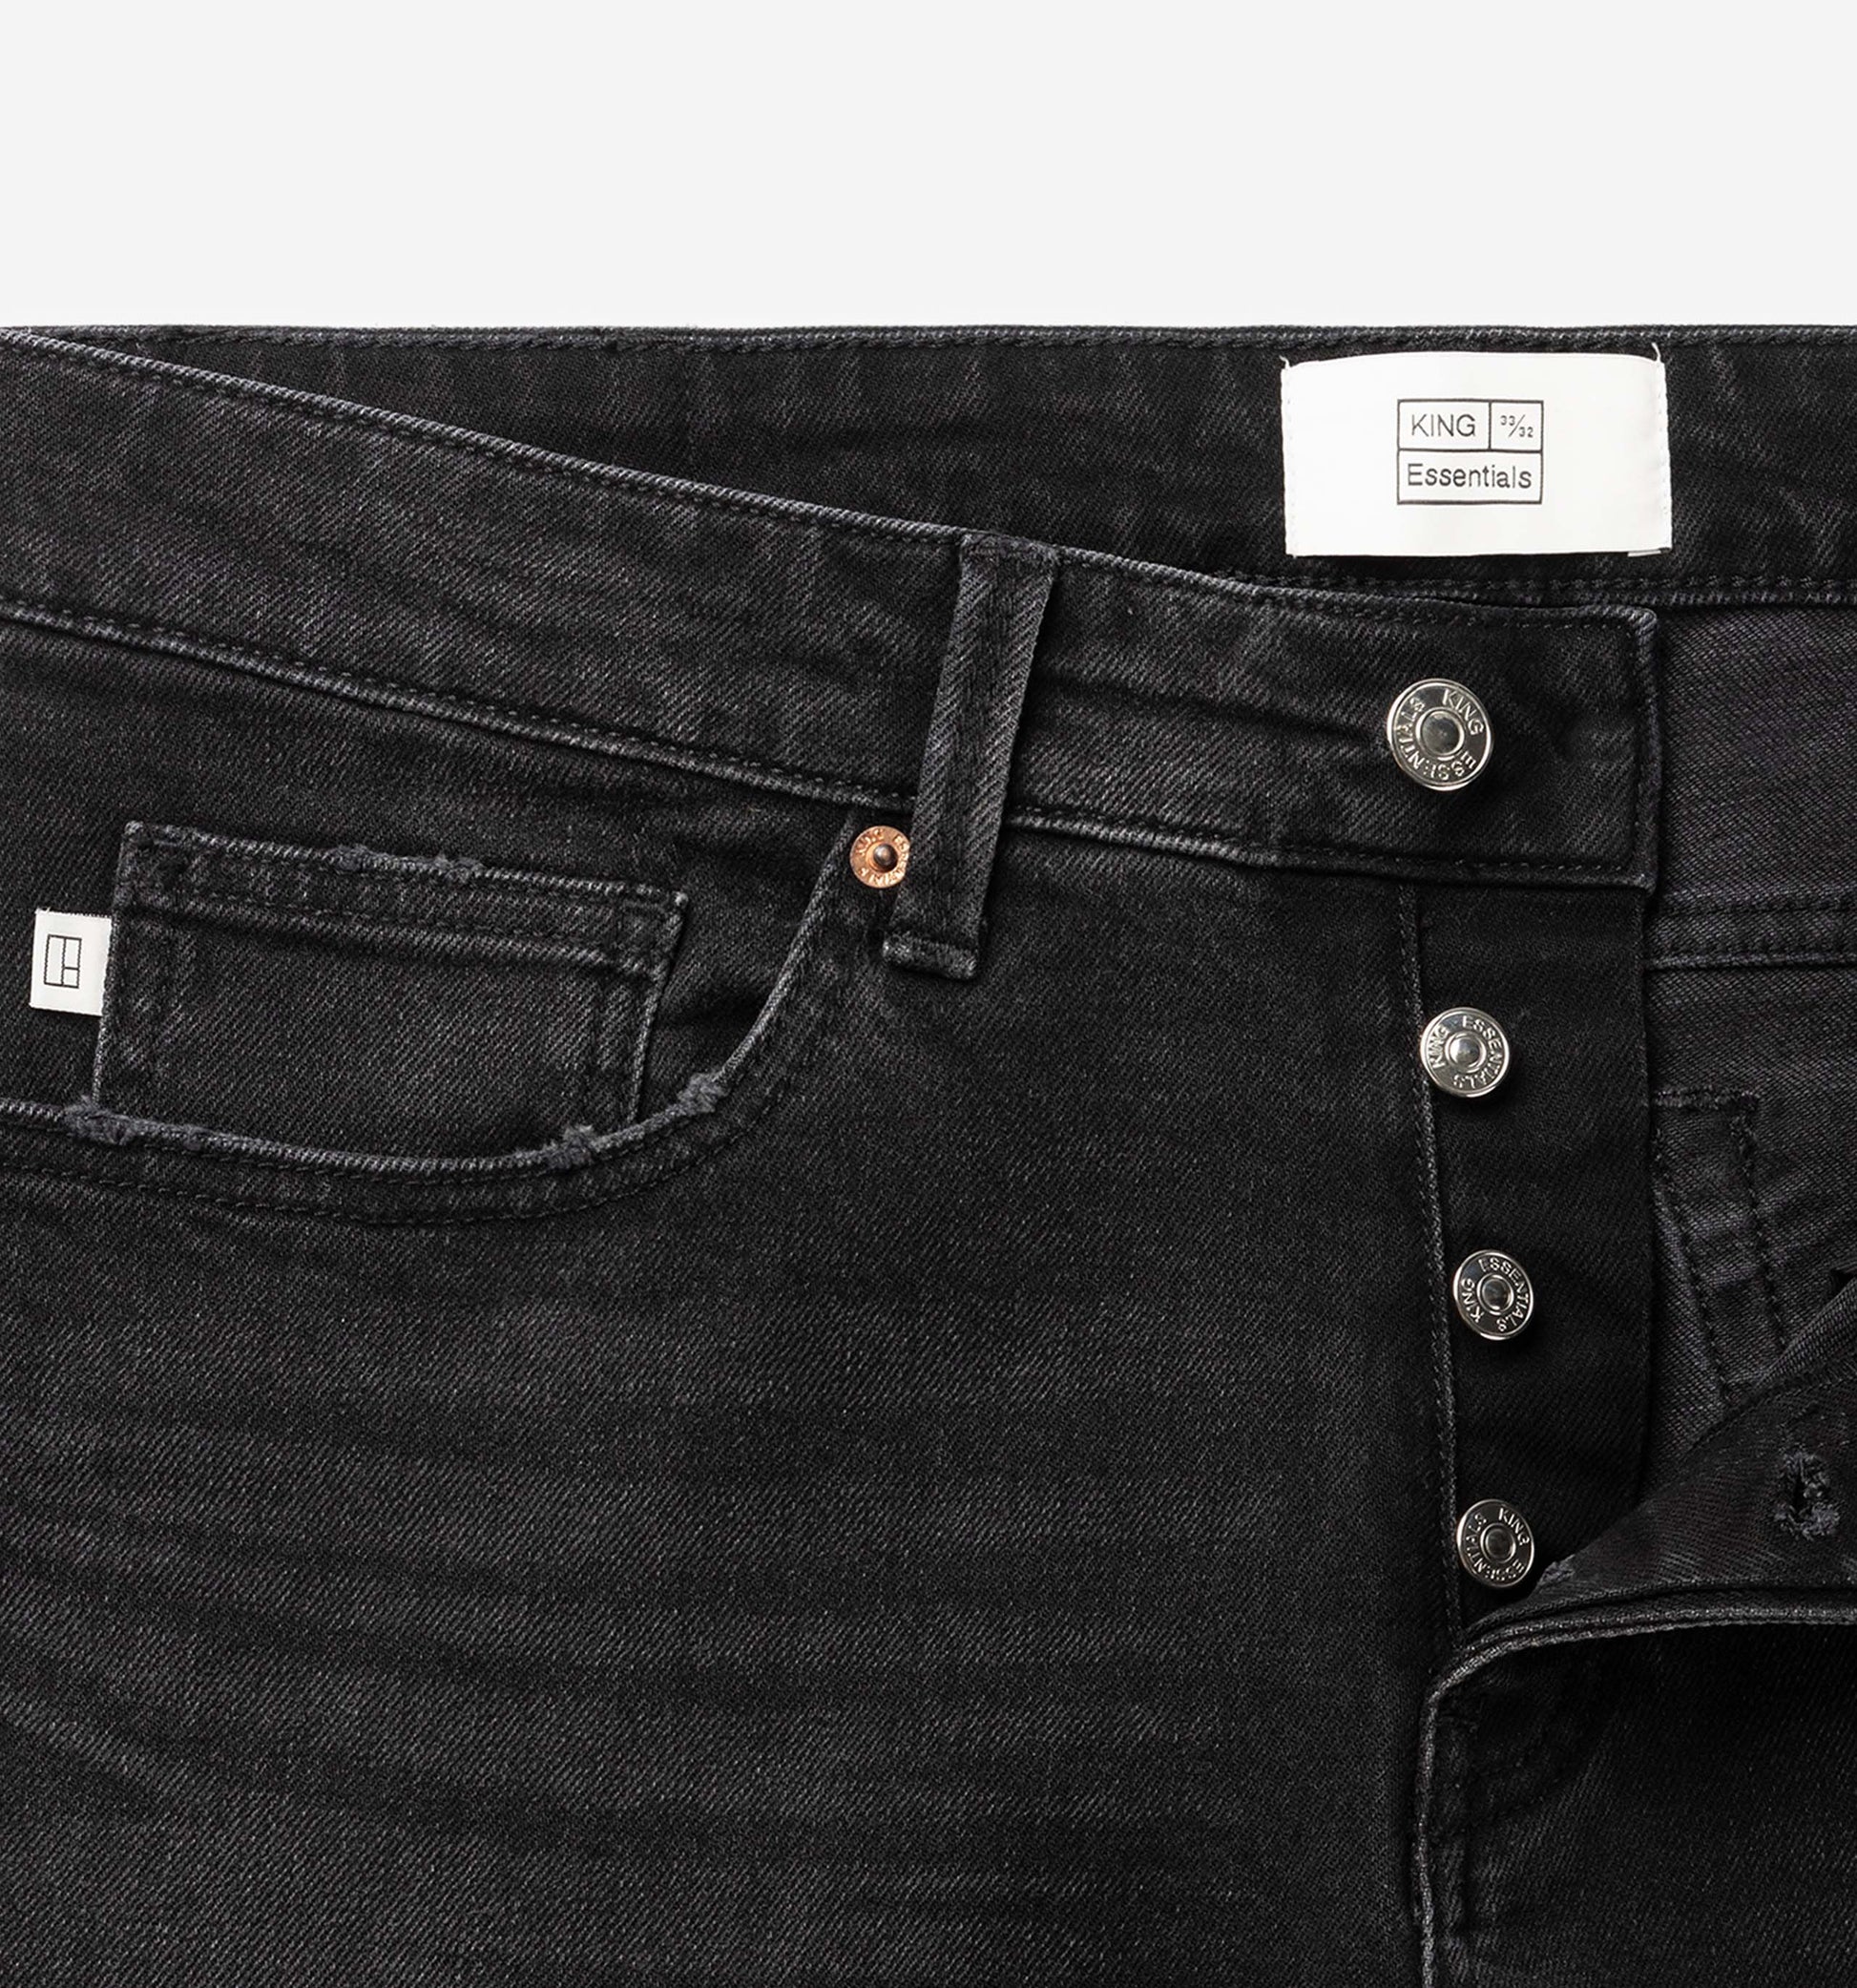 The Jason - Cotton-Stretch Black Wash Jeans | Black | King Essentials | Details